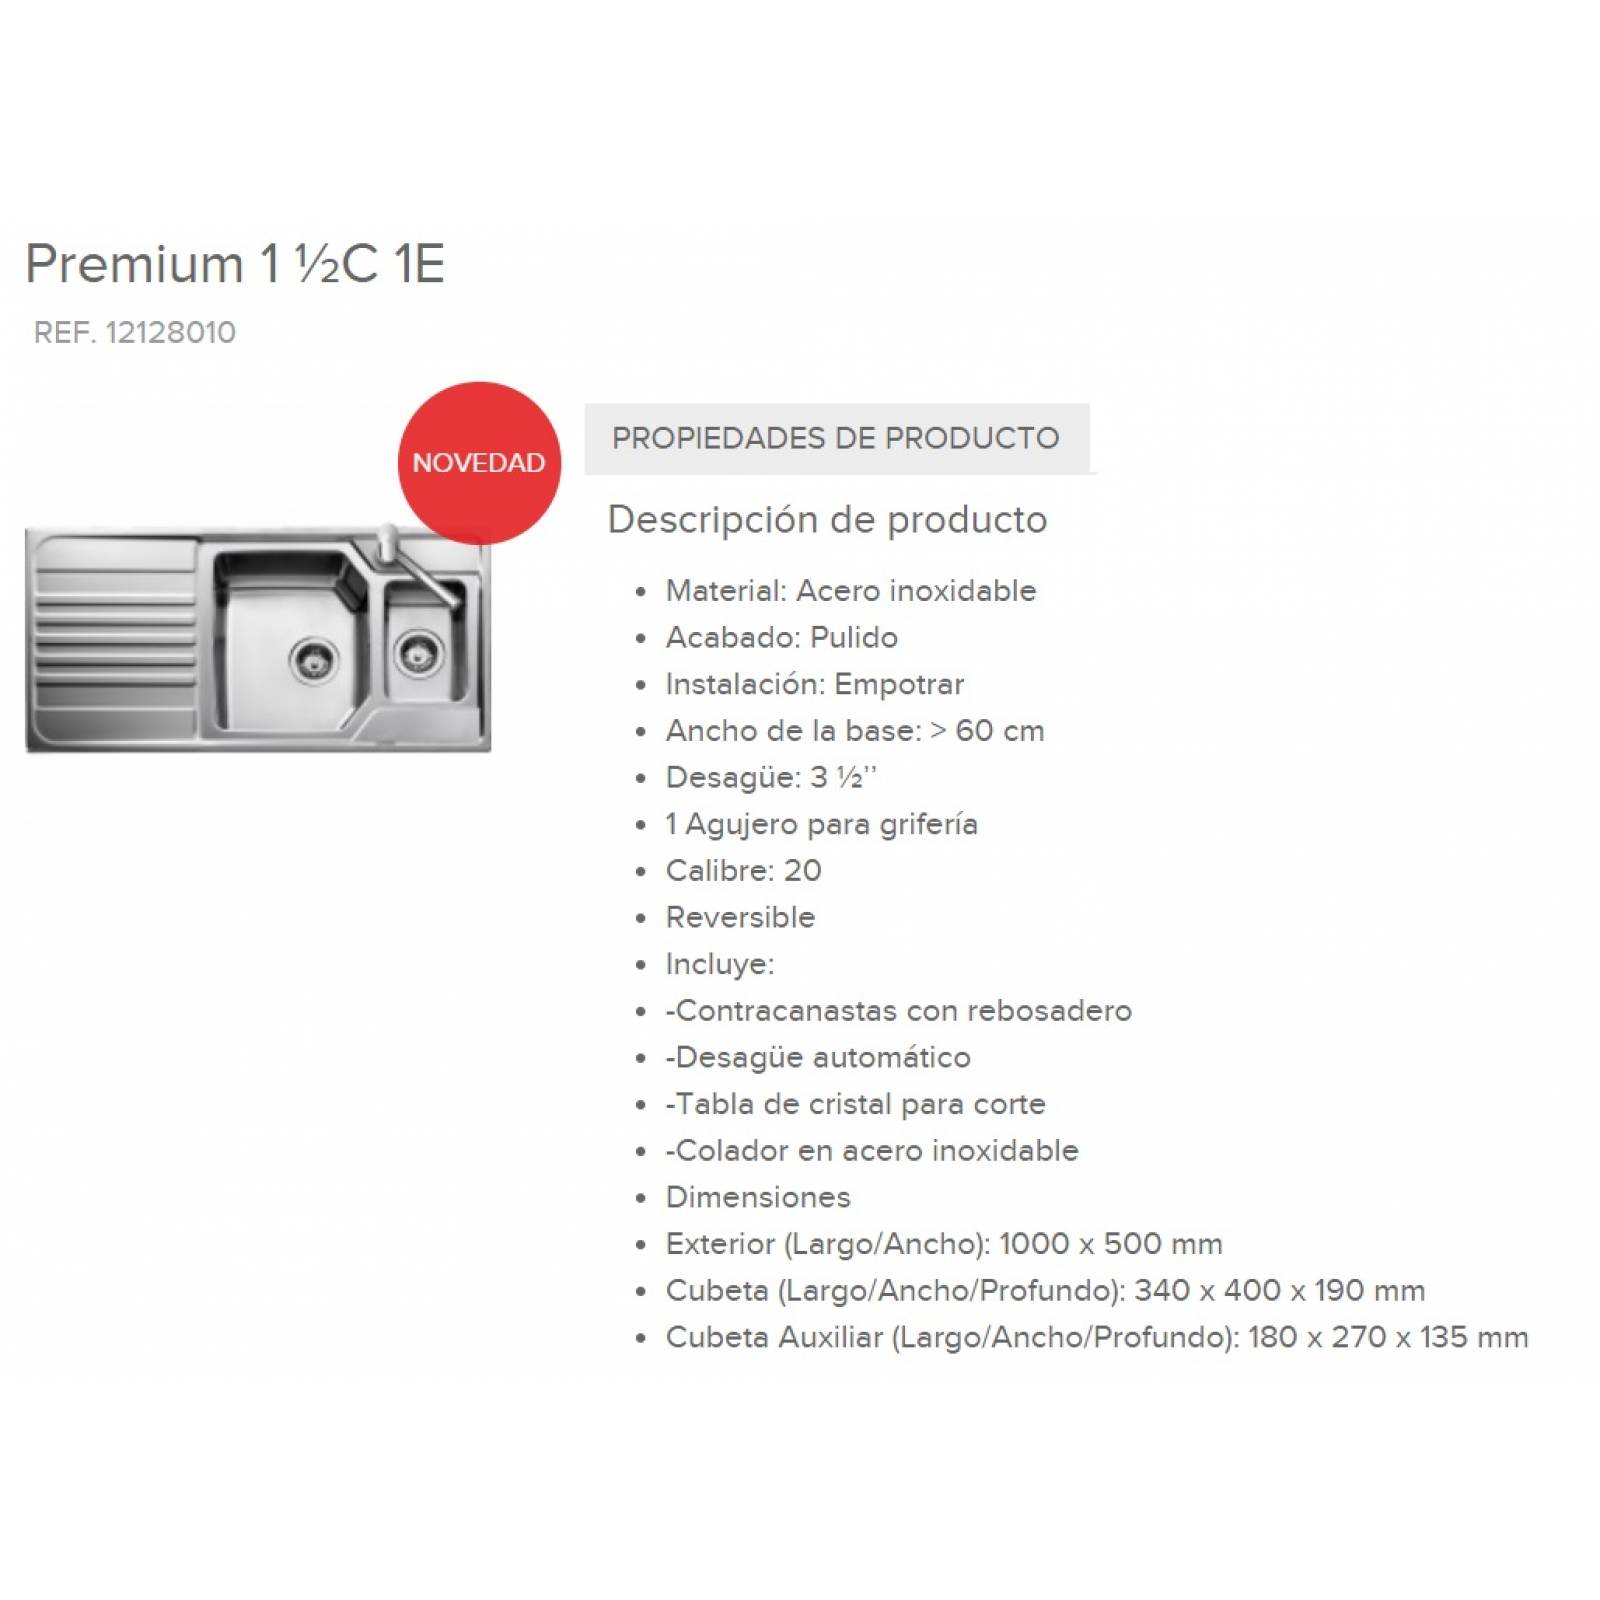 Fregadero Teka Submont/empotr Premium 1 1/2c 1e I/d 12128010